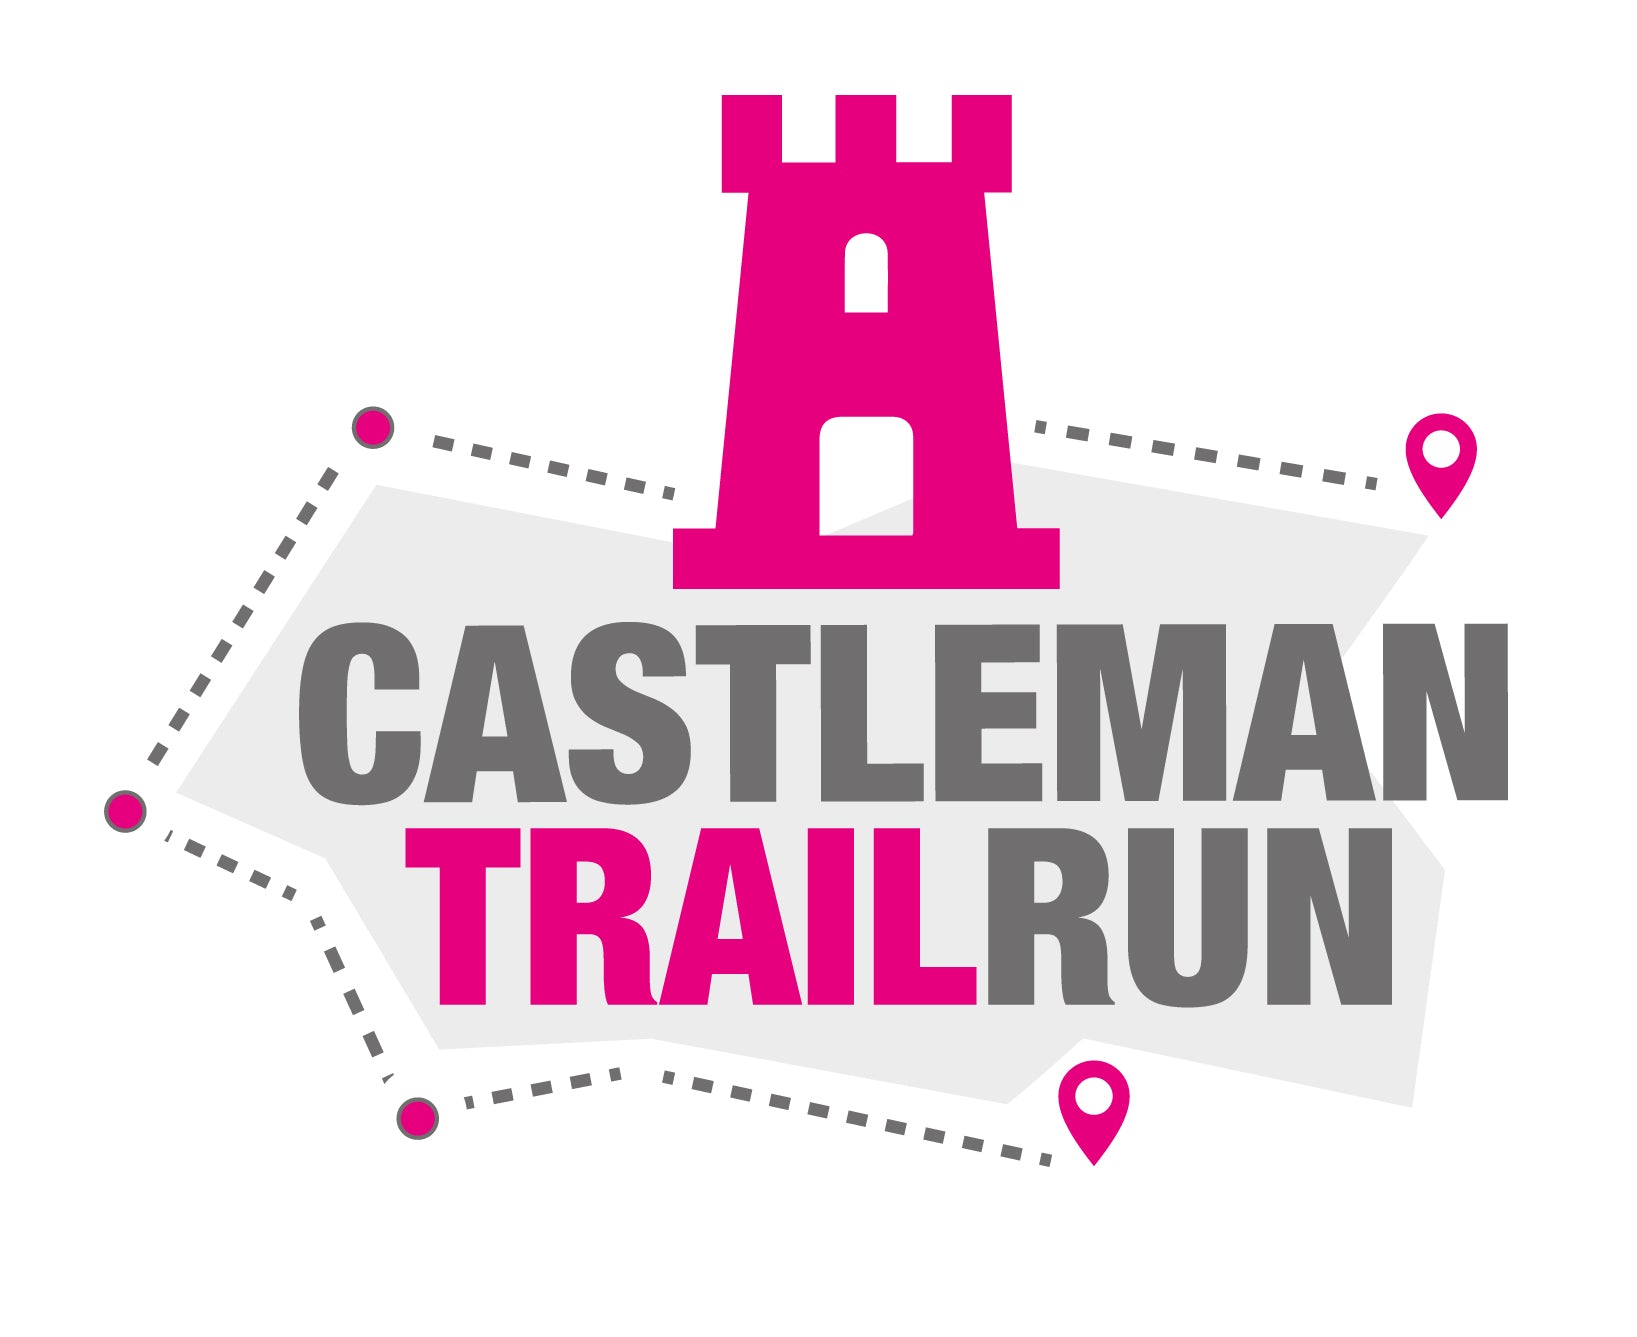 Trax-evenementen. Castleman trailrun. 25km